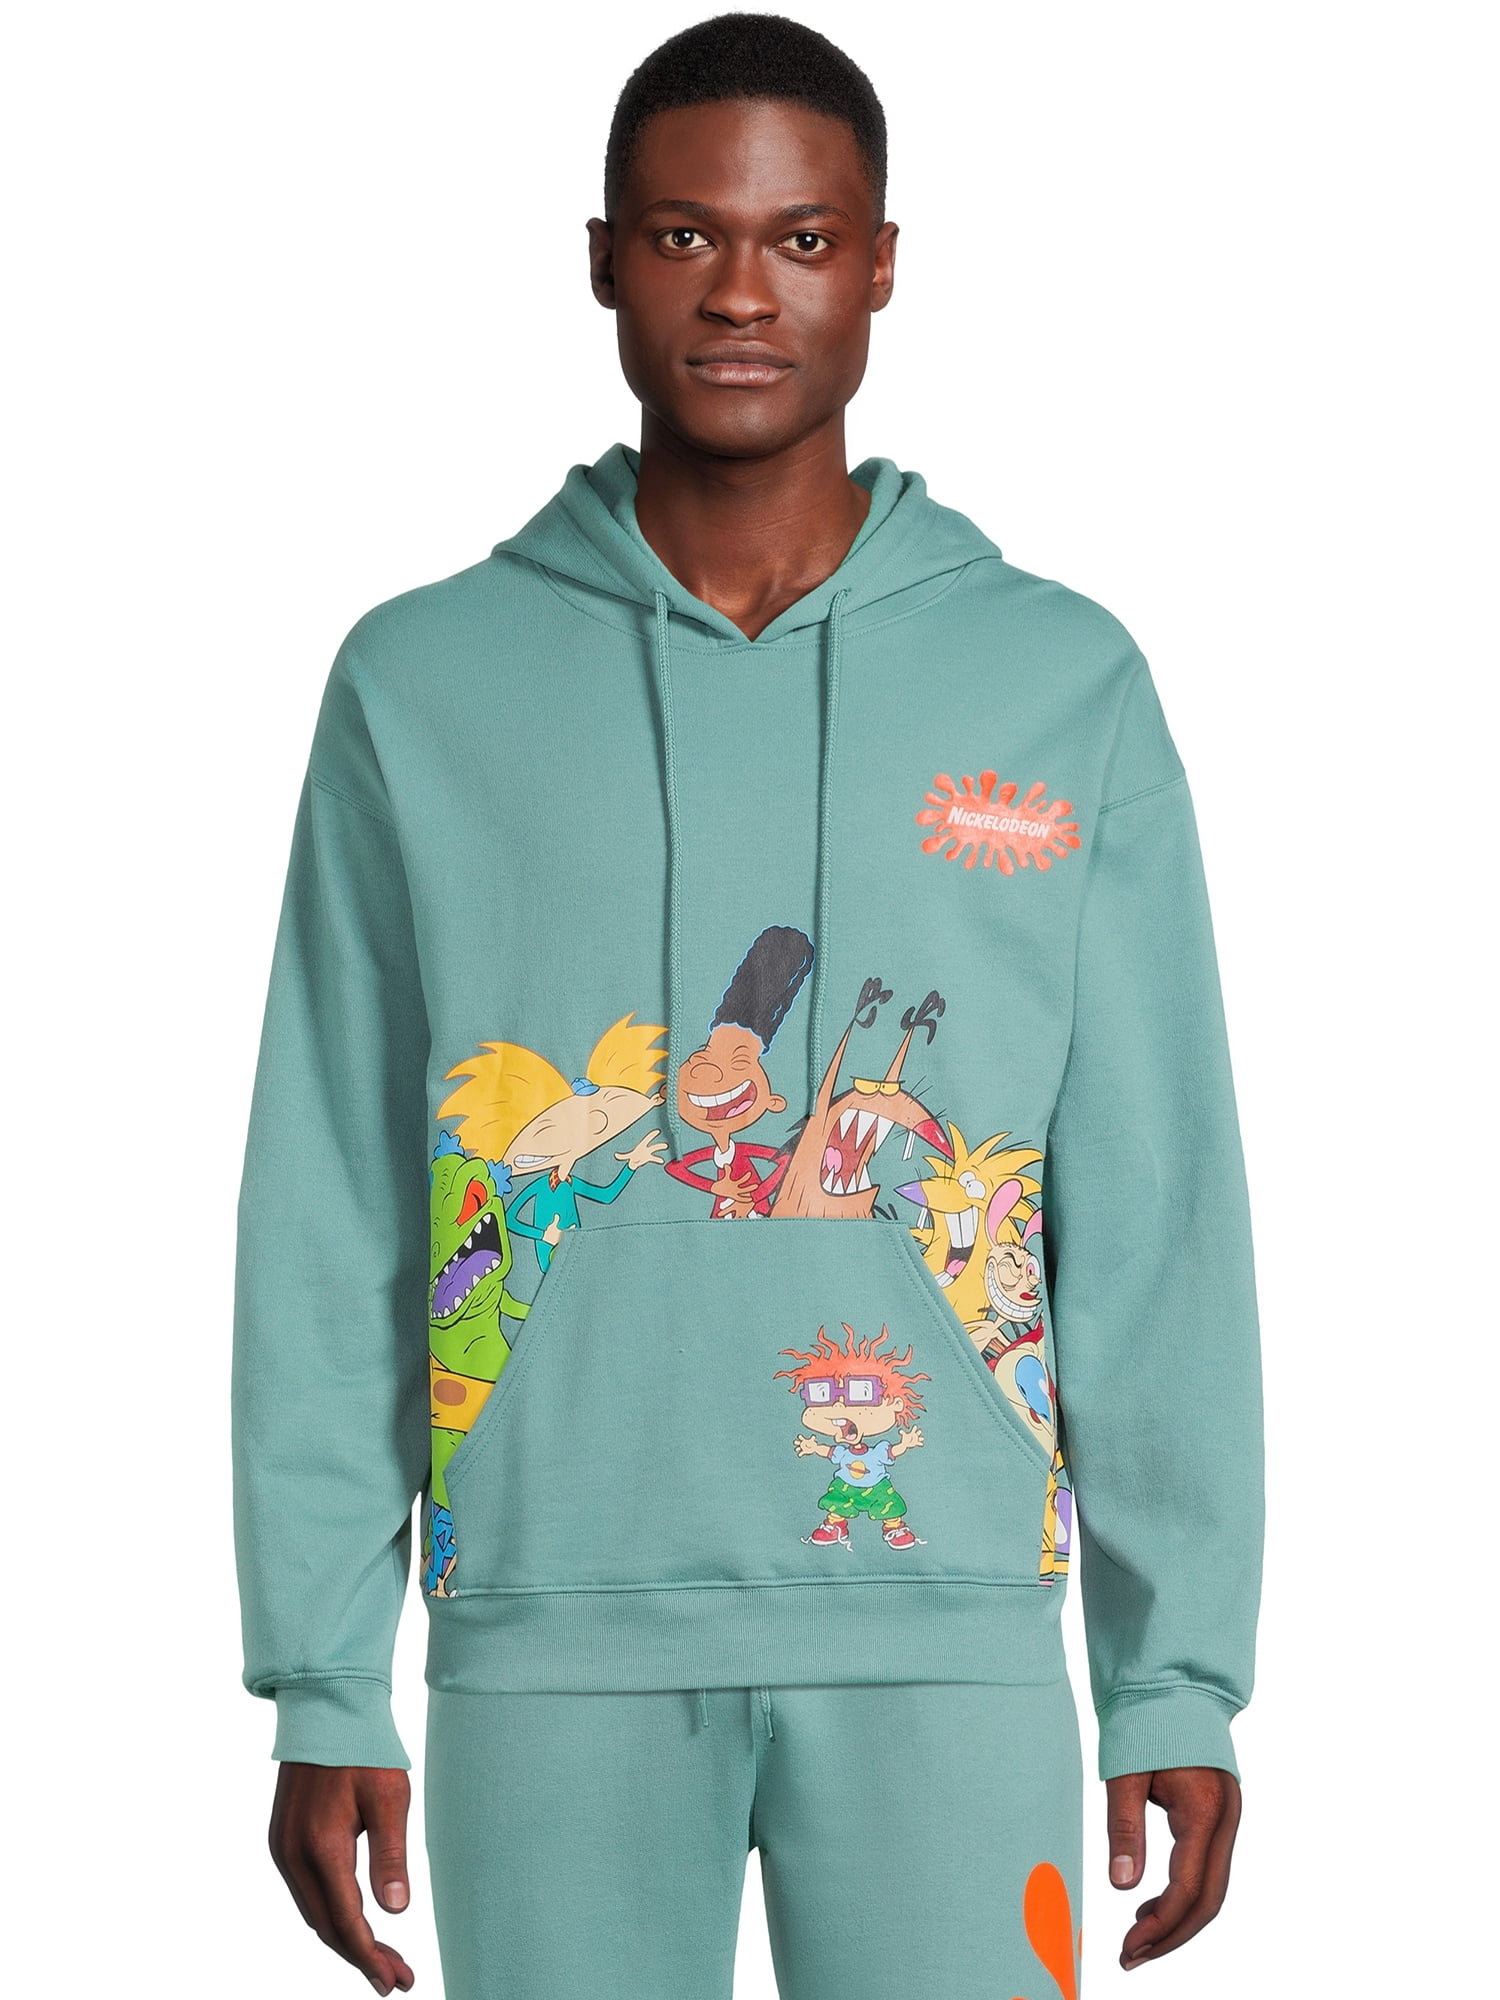 Nickelodeon Men's Cast Mash Up Graphic Hoodie Sweatshirt, Sizes S-2XL